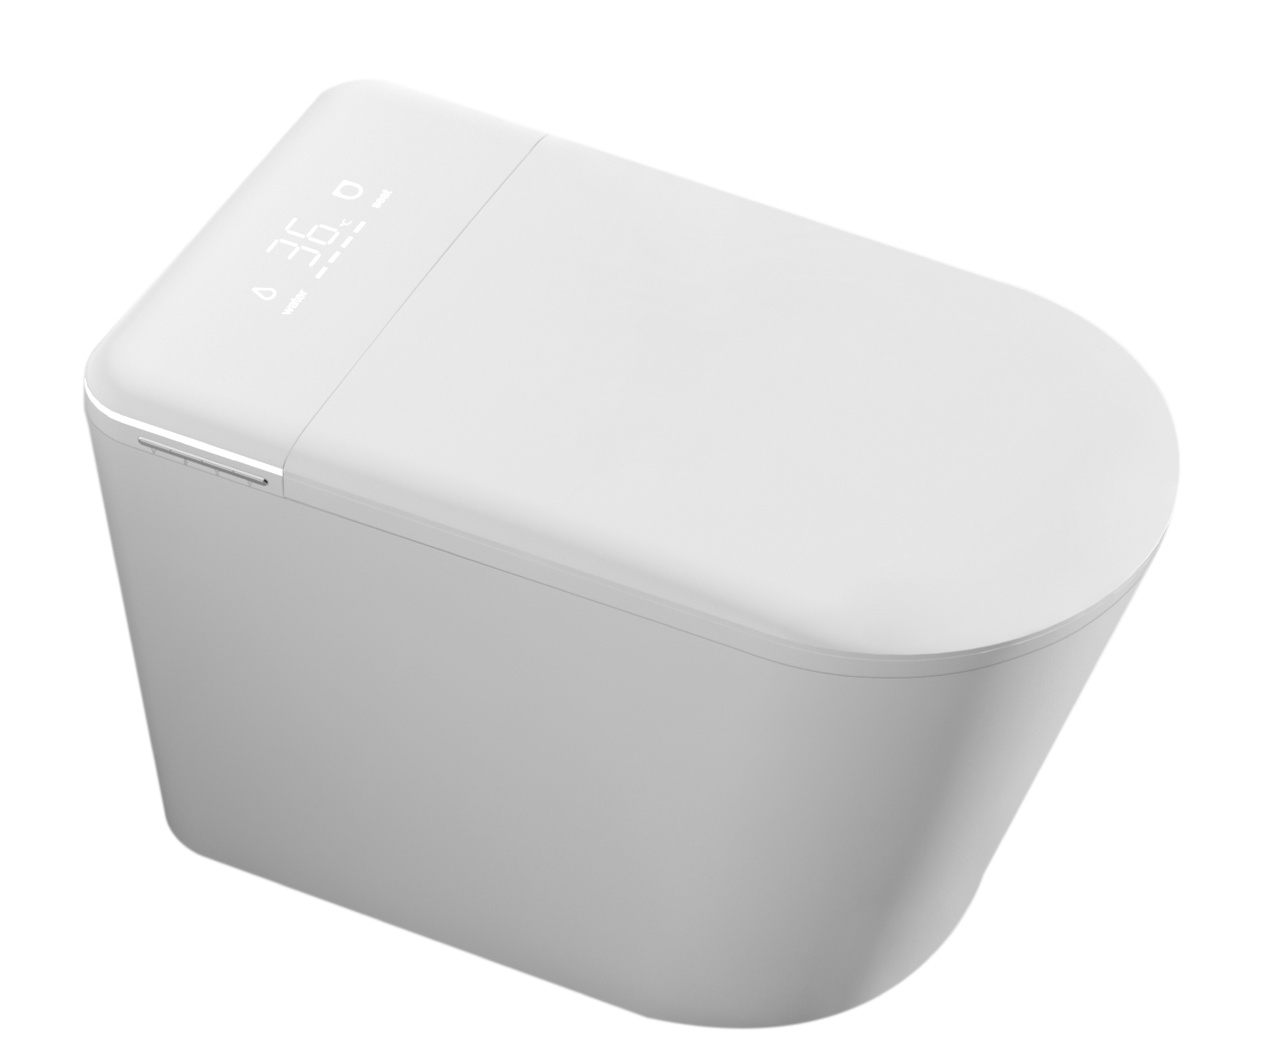 Intelligent smart toilet H-5005